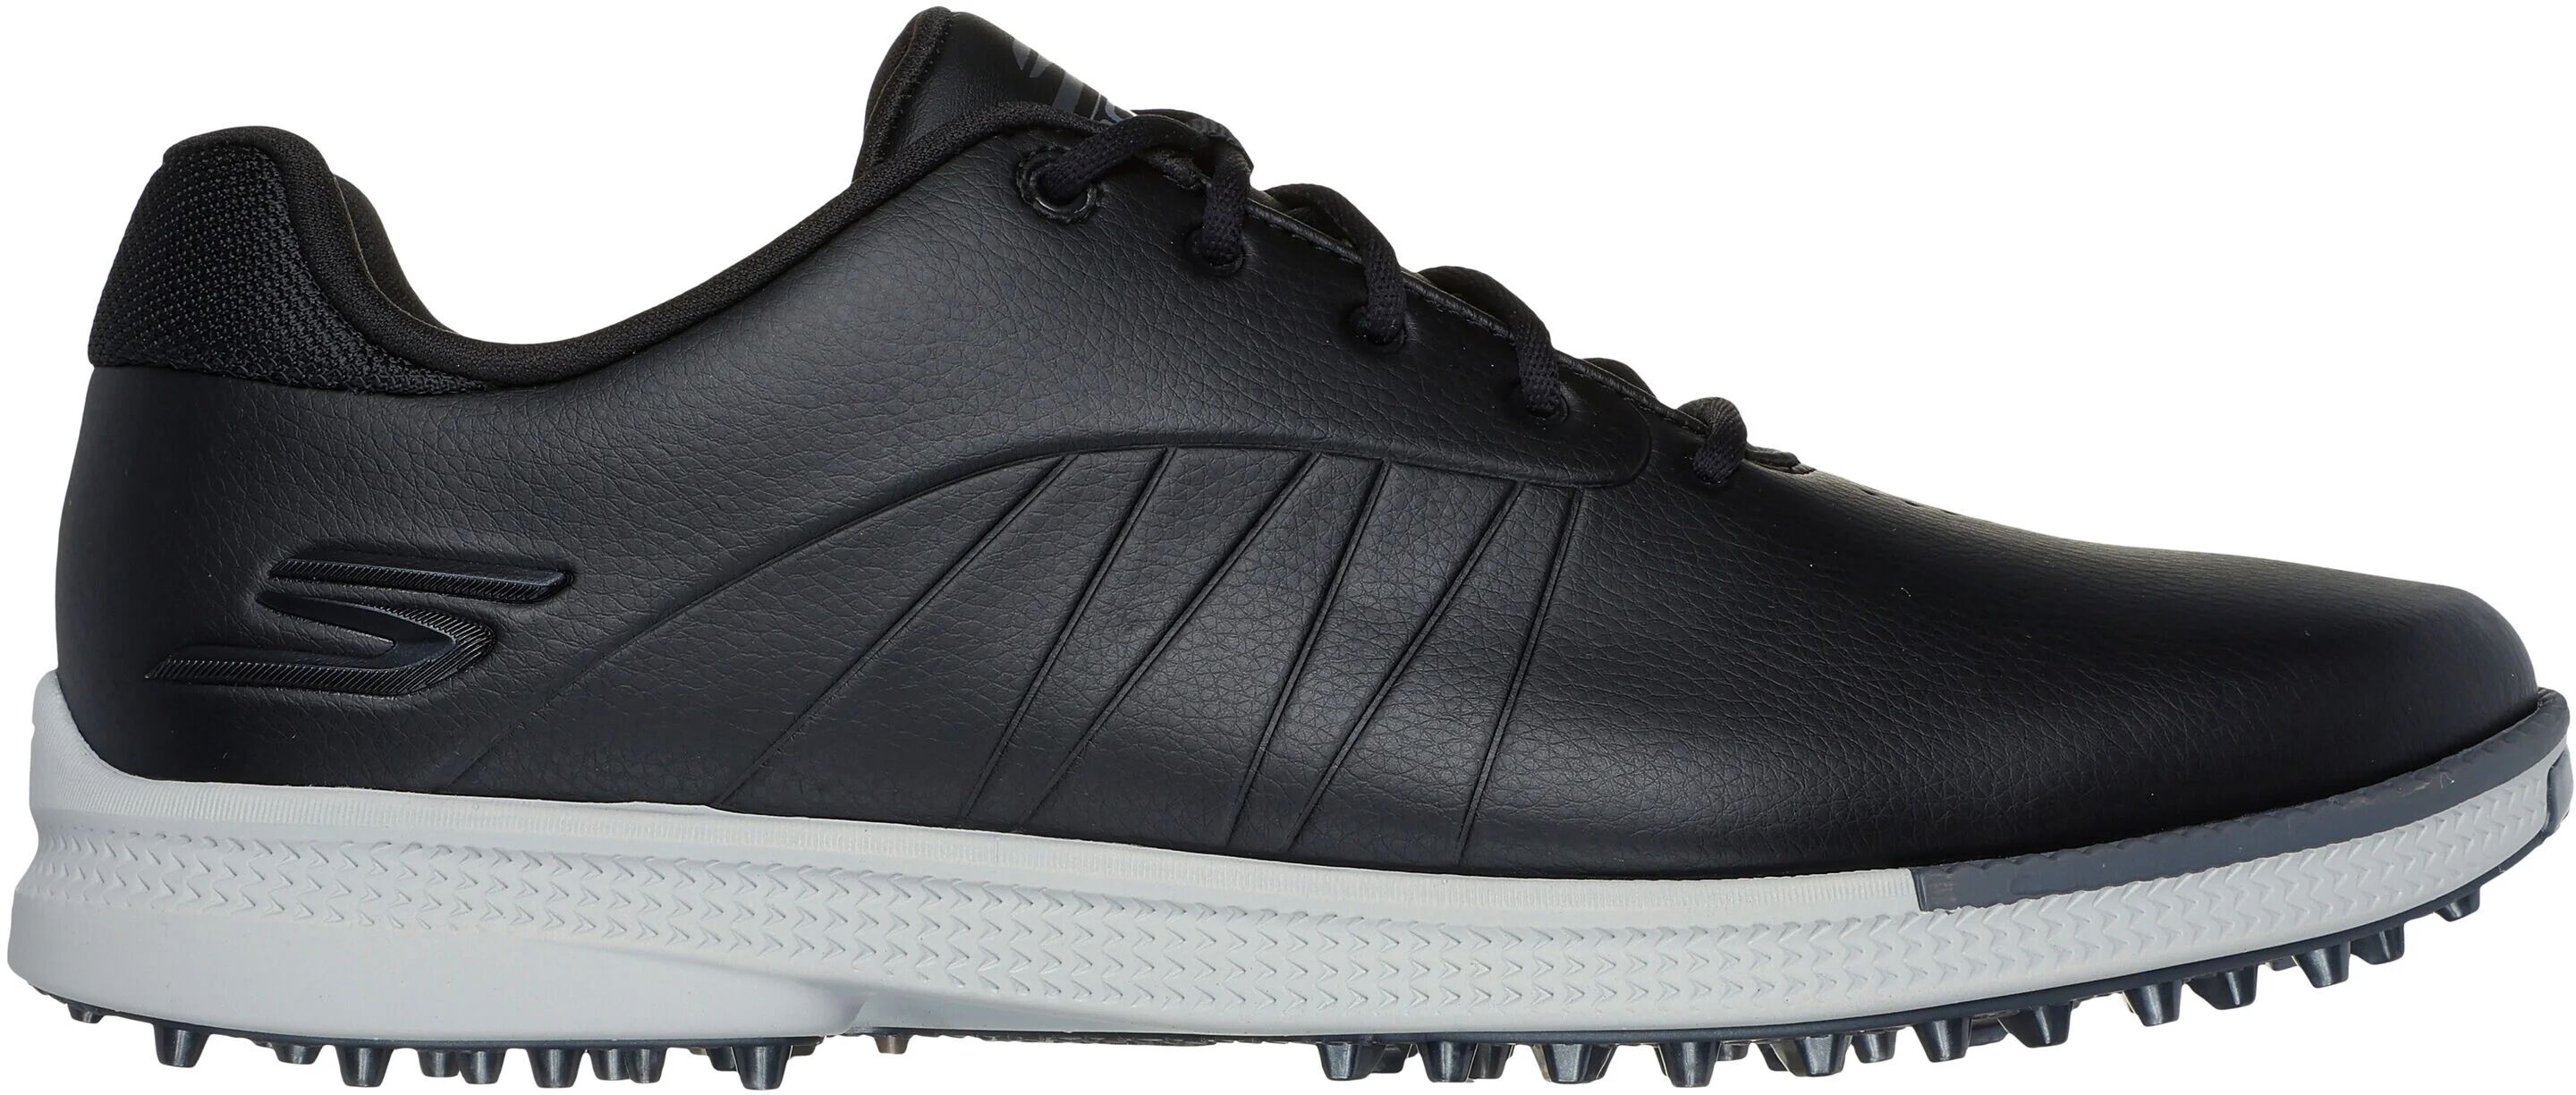 Skechers GO GOLF Tempo GF Golf Shoes - Black/Gray - 8 - WIDE